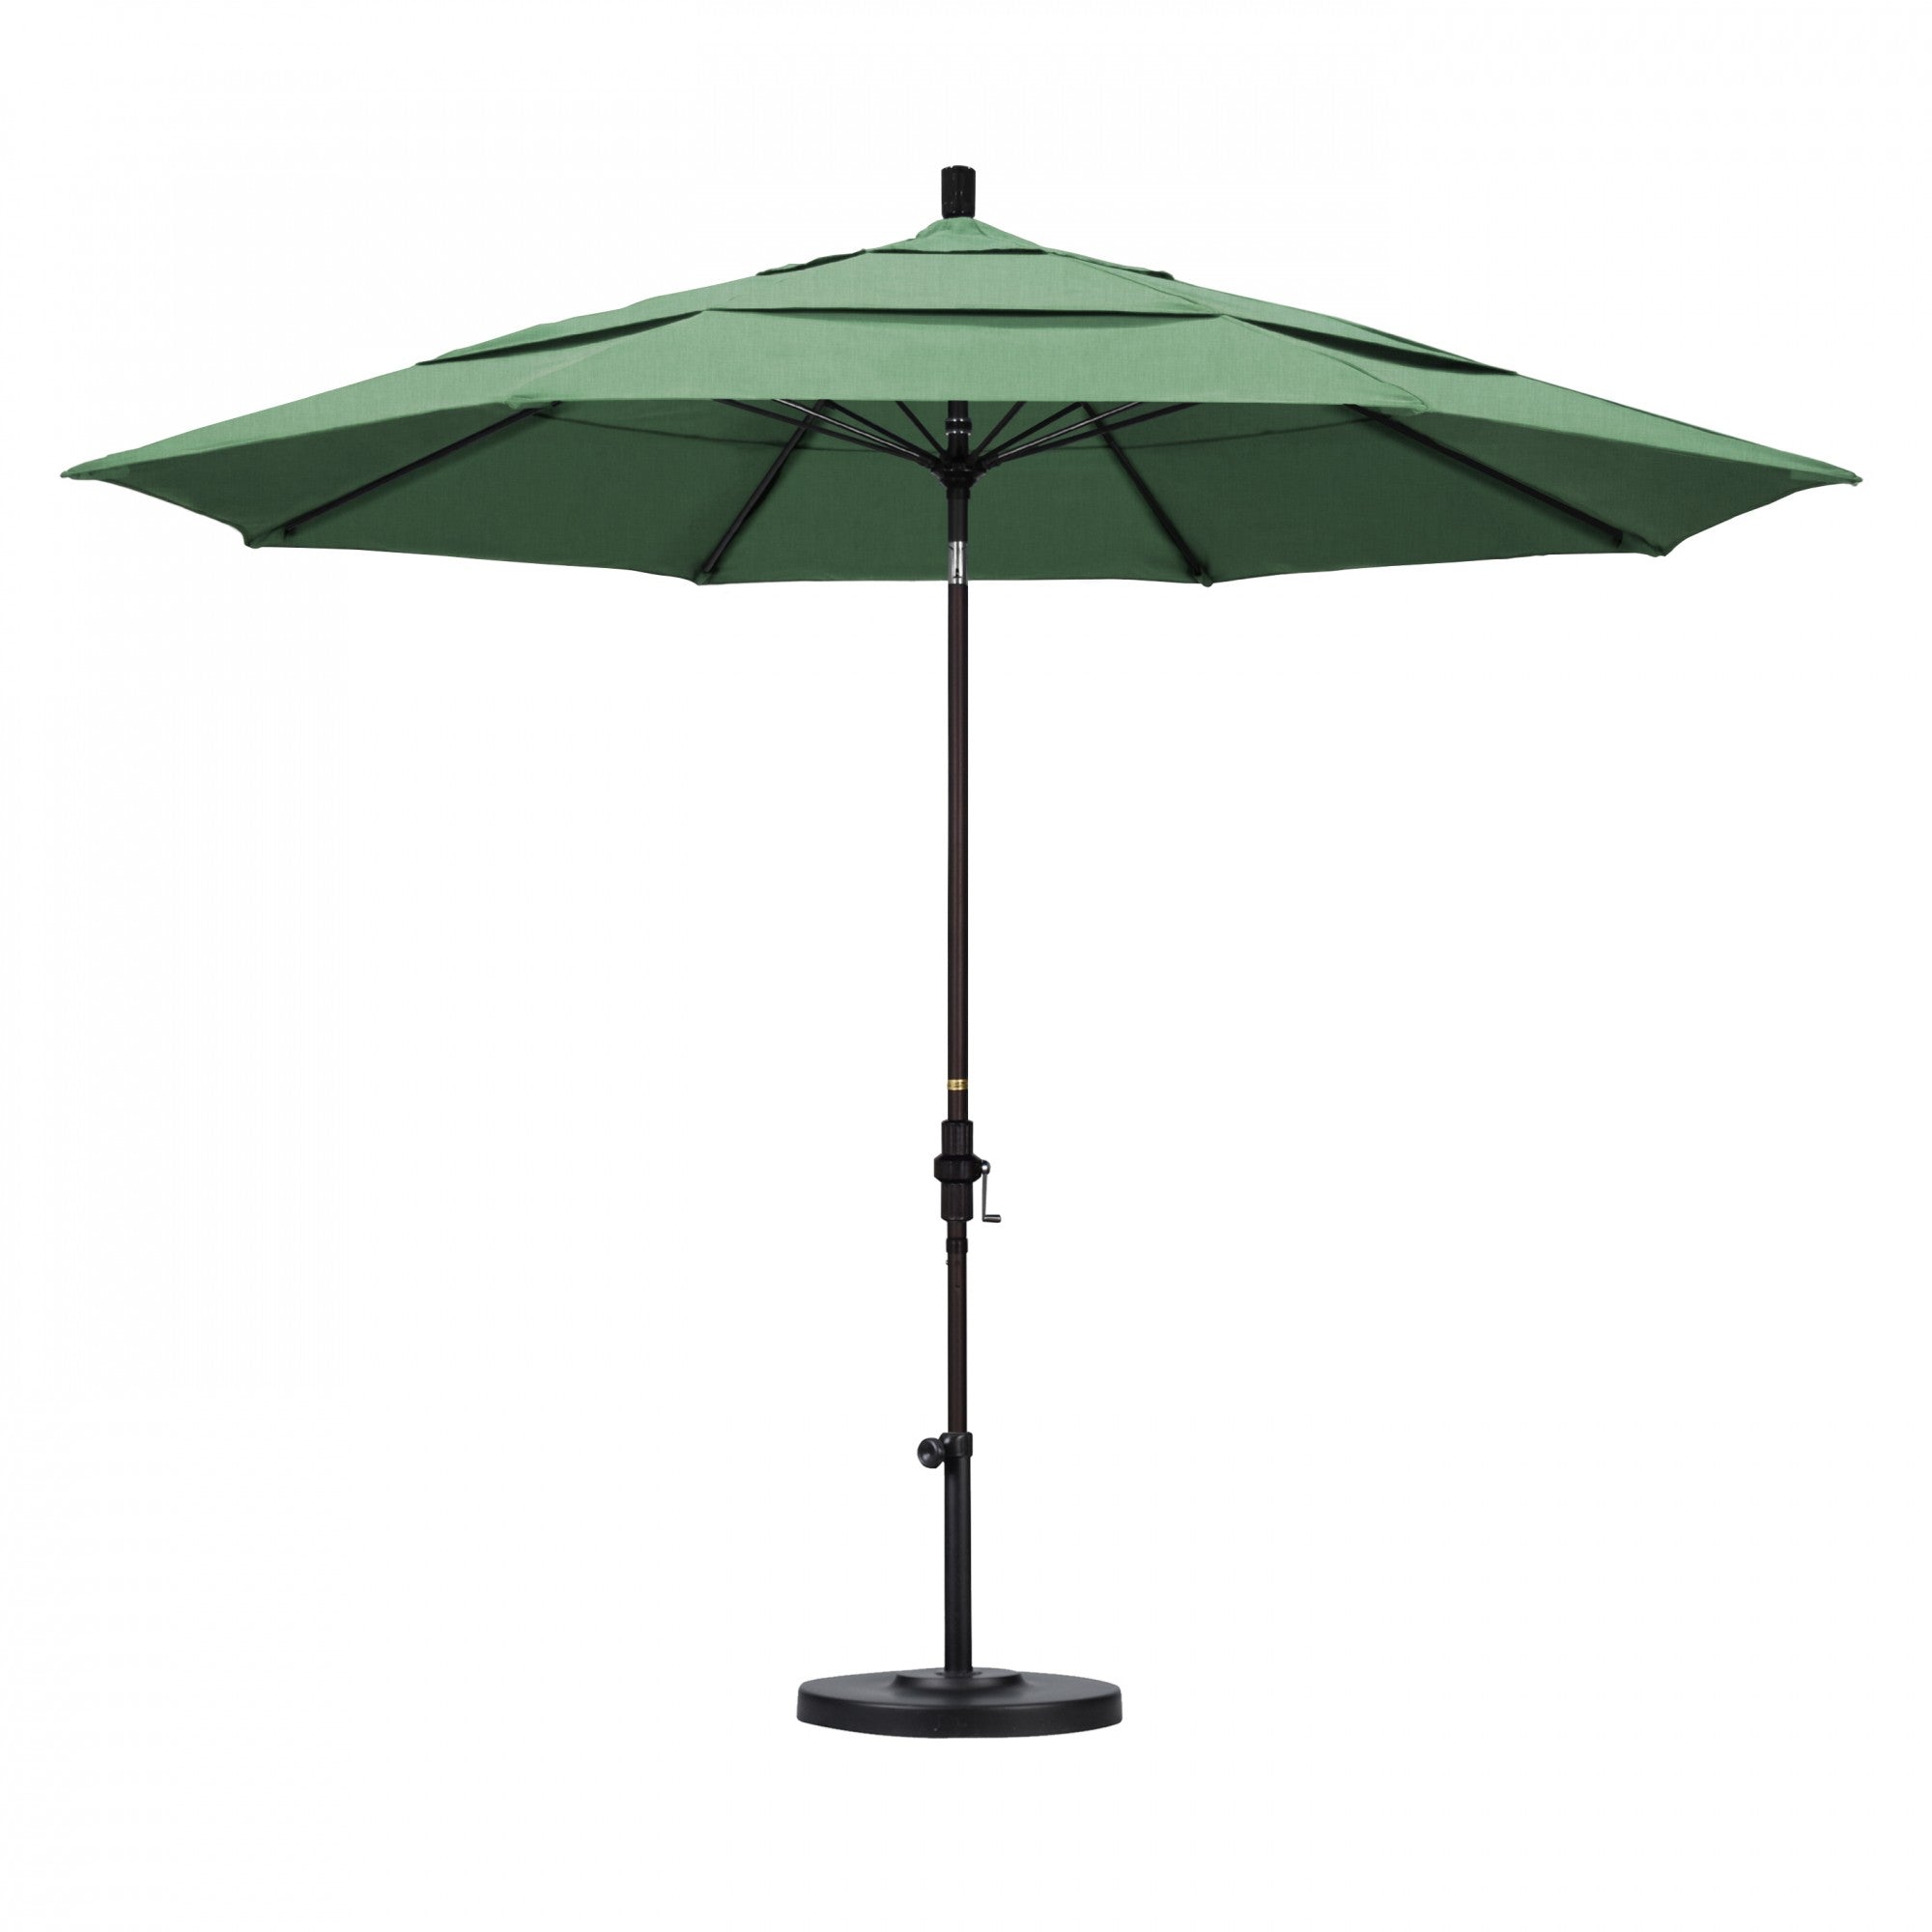 California Umbrella - 11' - Patio Umbrella Umbrella - Aluminum Pole - Spa - Pacifica - GSCUF118117-SA13-DWV